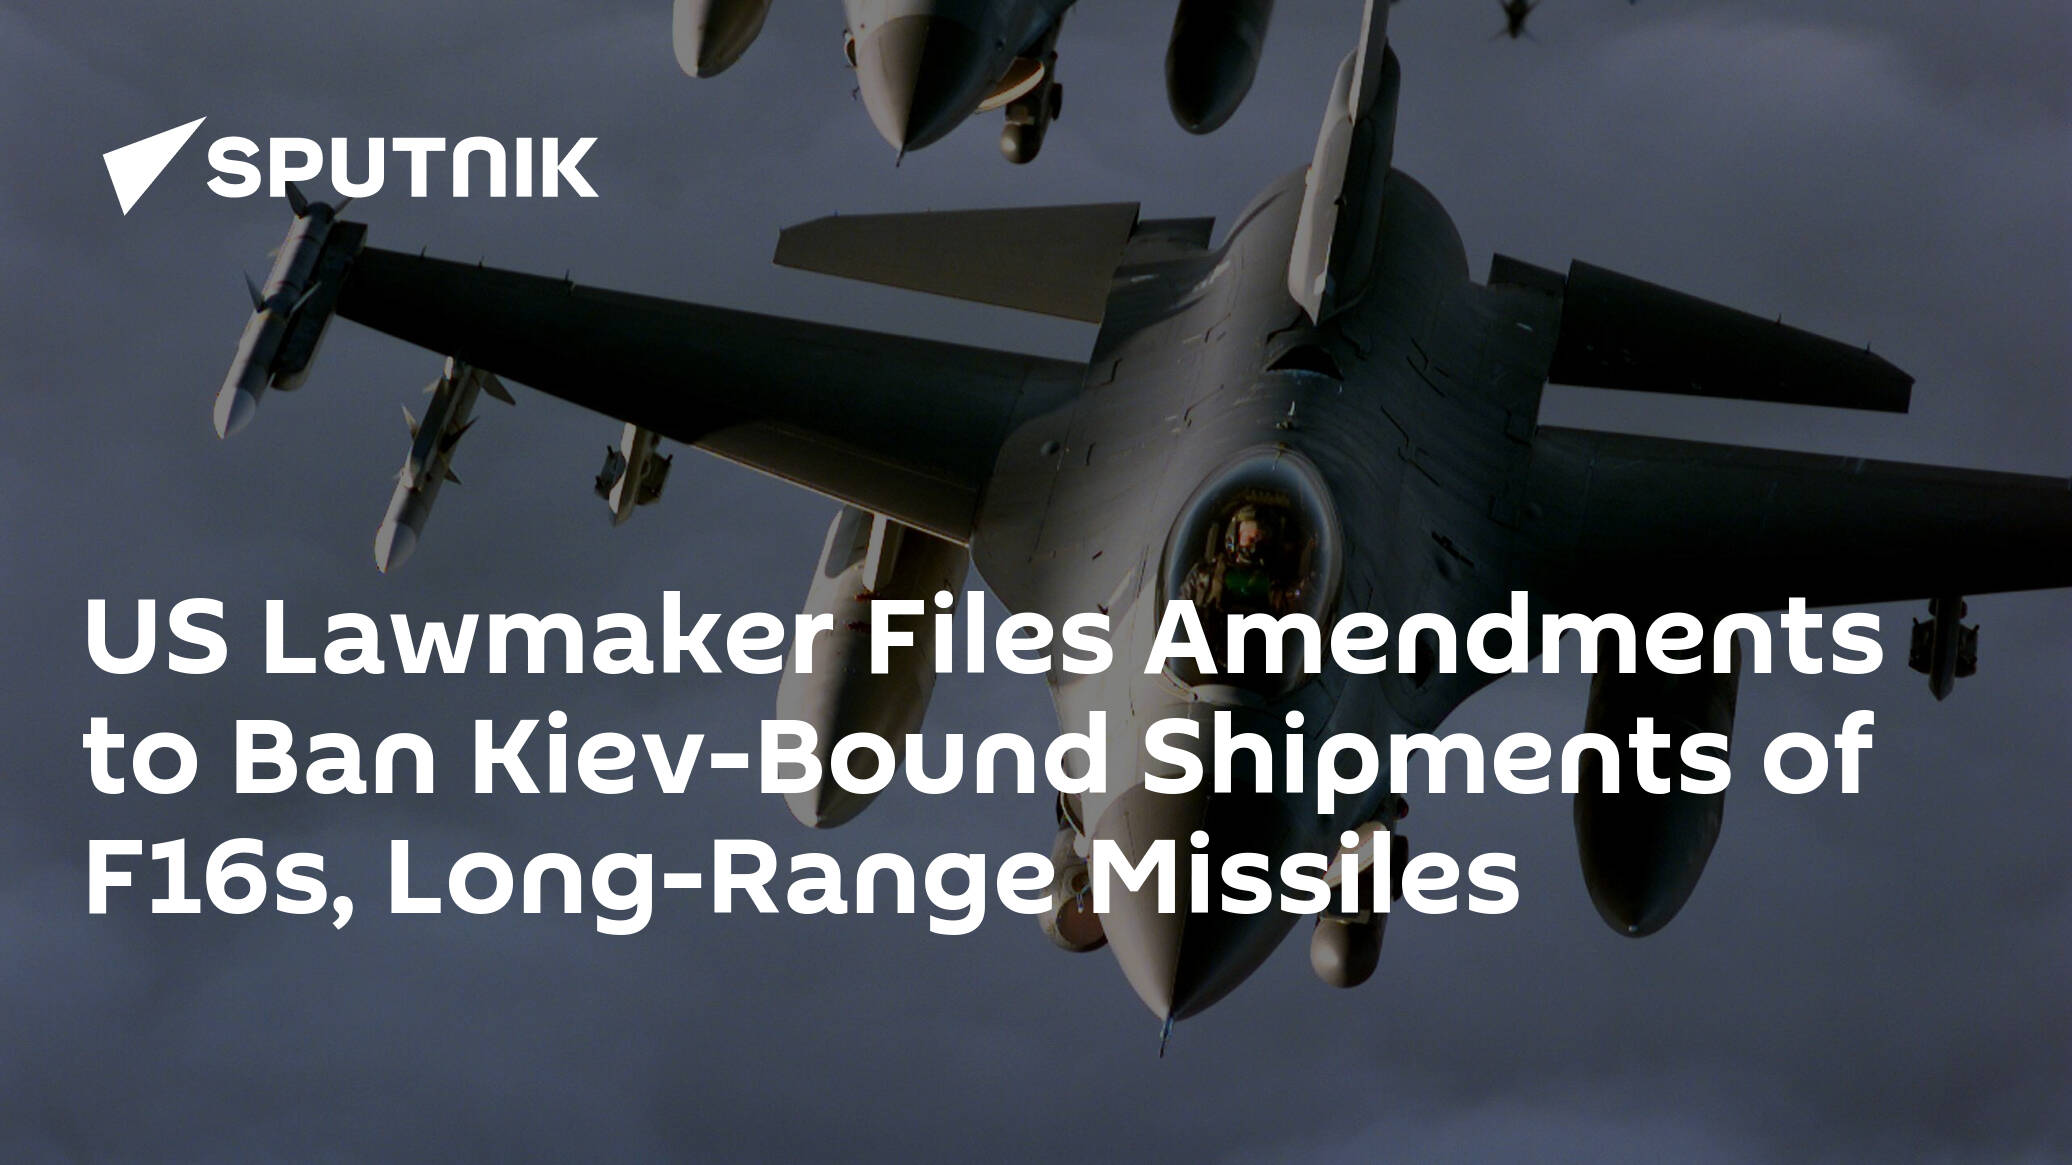 US Lawmaker Files Amendments to Ban Kiev-Bound Shipments of F16s, Long-Range Missiles